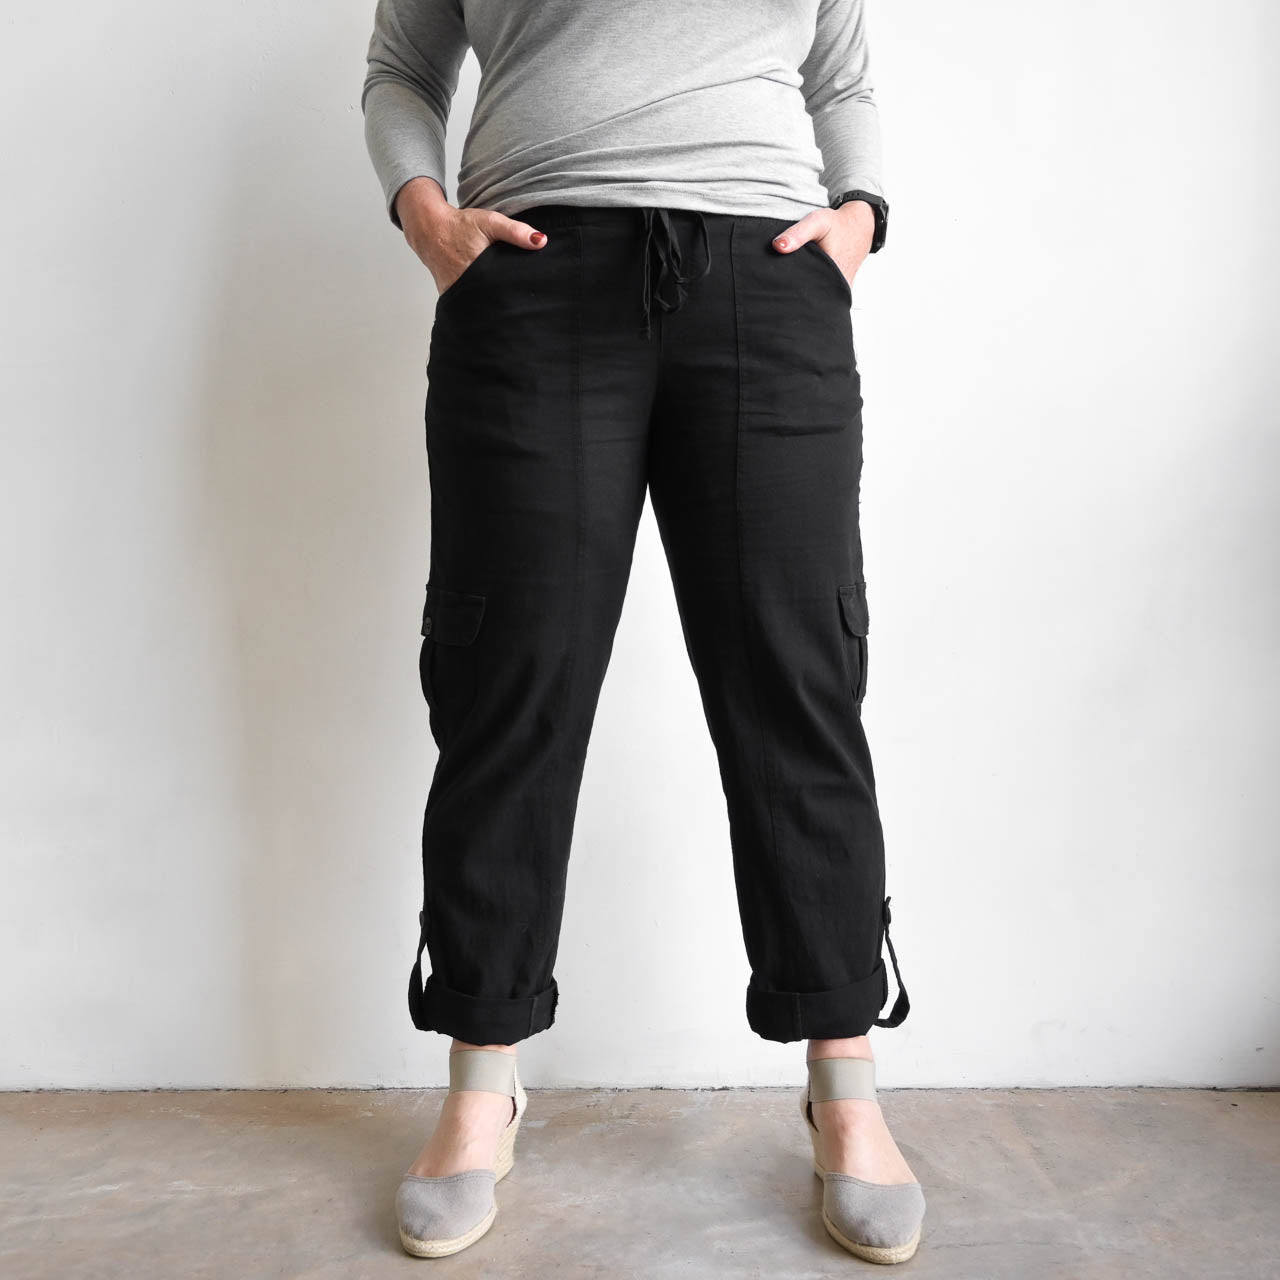 Long Capri Stretch Pants With Pockets - Black, White, Navy blue, Olive  Green – KOBOMO